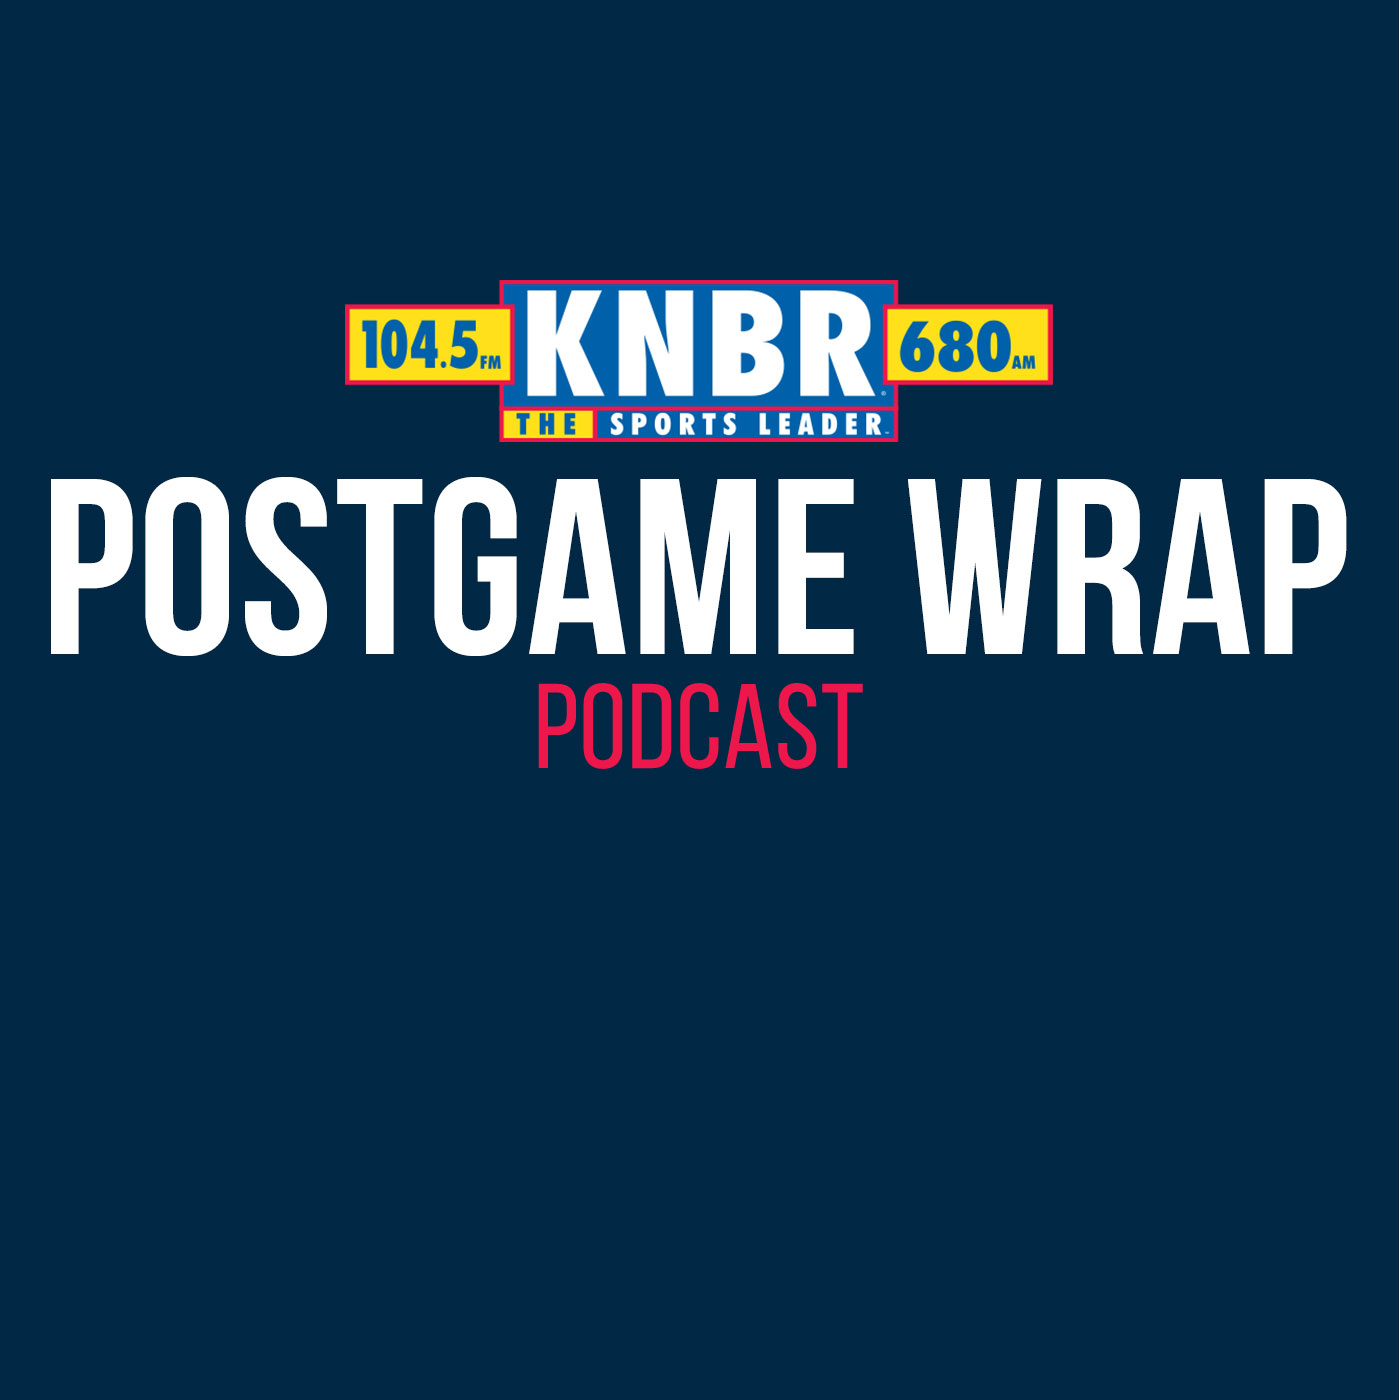 6-11 Postgame Wrap: Giants 1, Nats 0